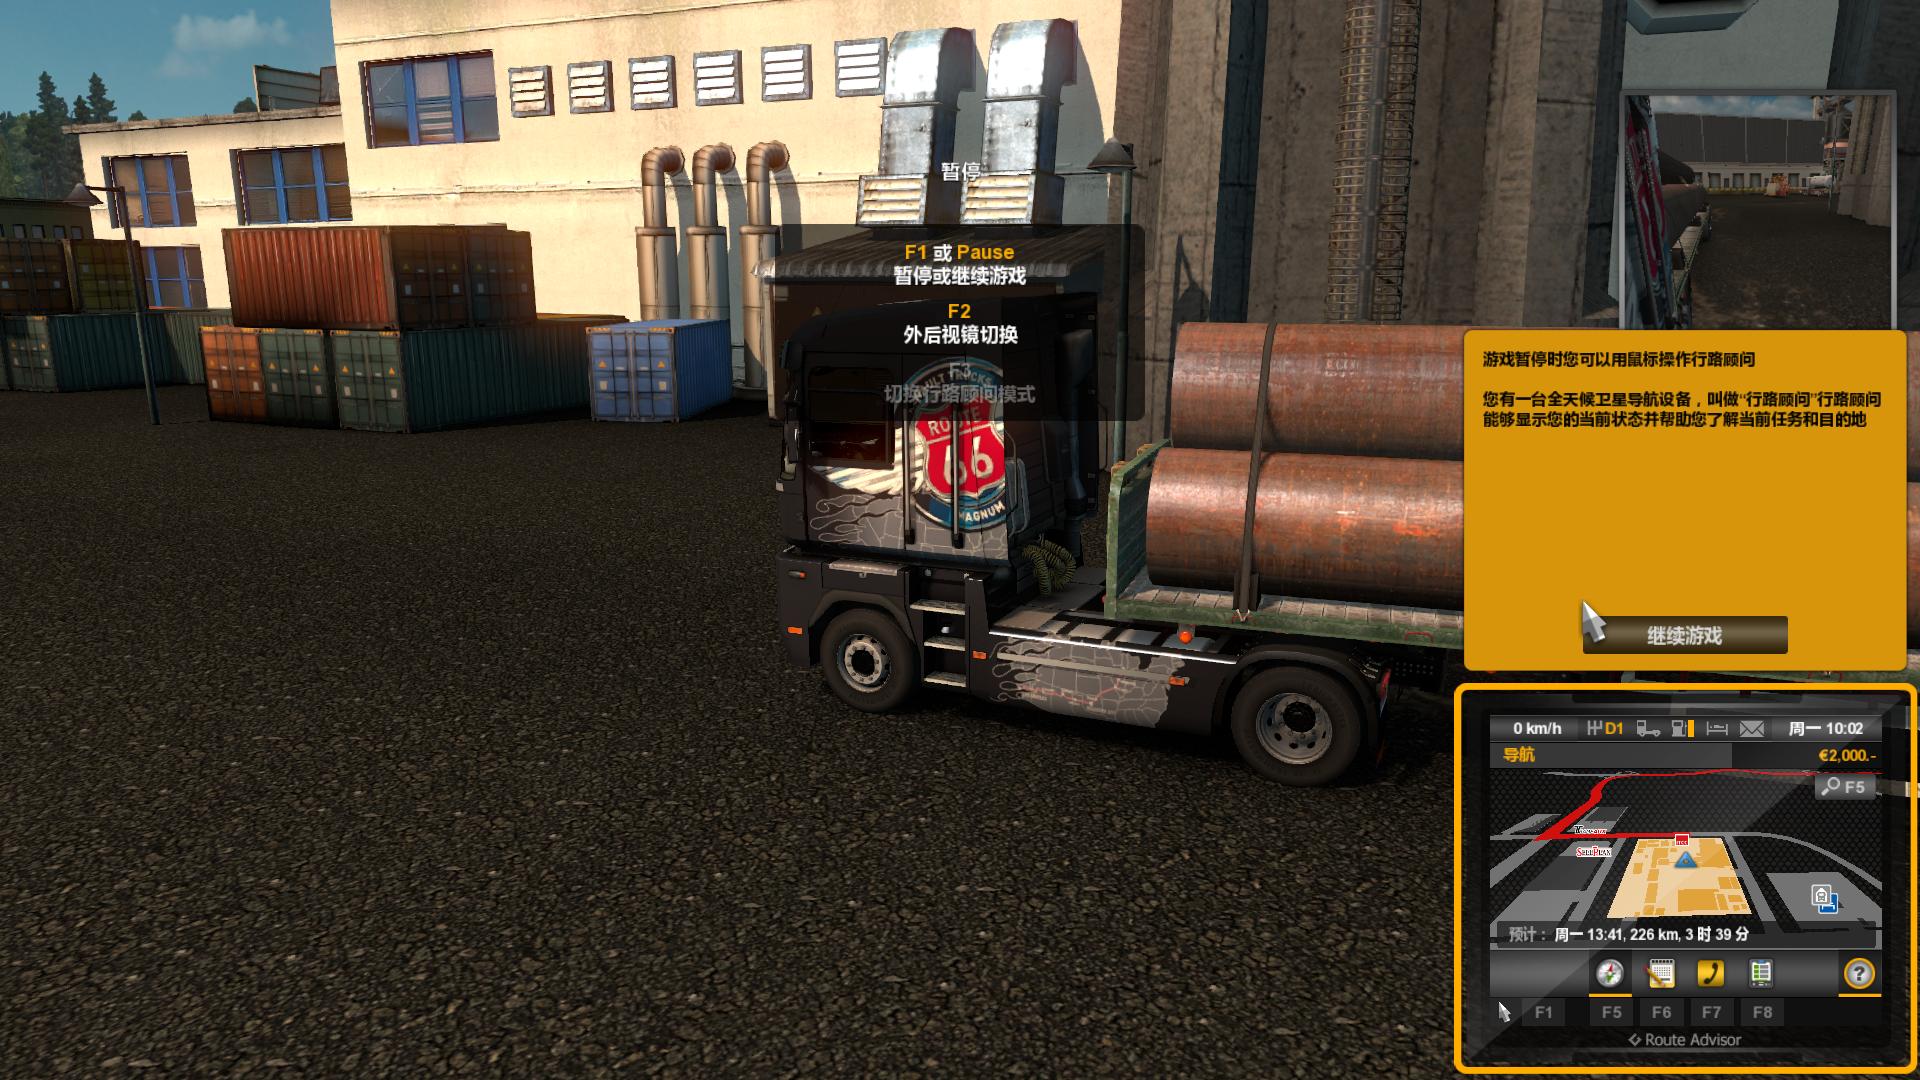 ŷ޿ģ2Euro Truck Simulator 2v1.27̥תMOD